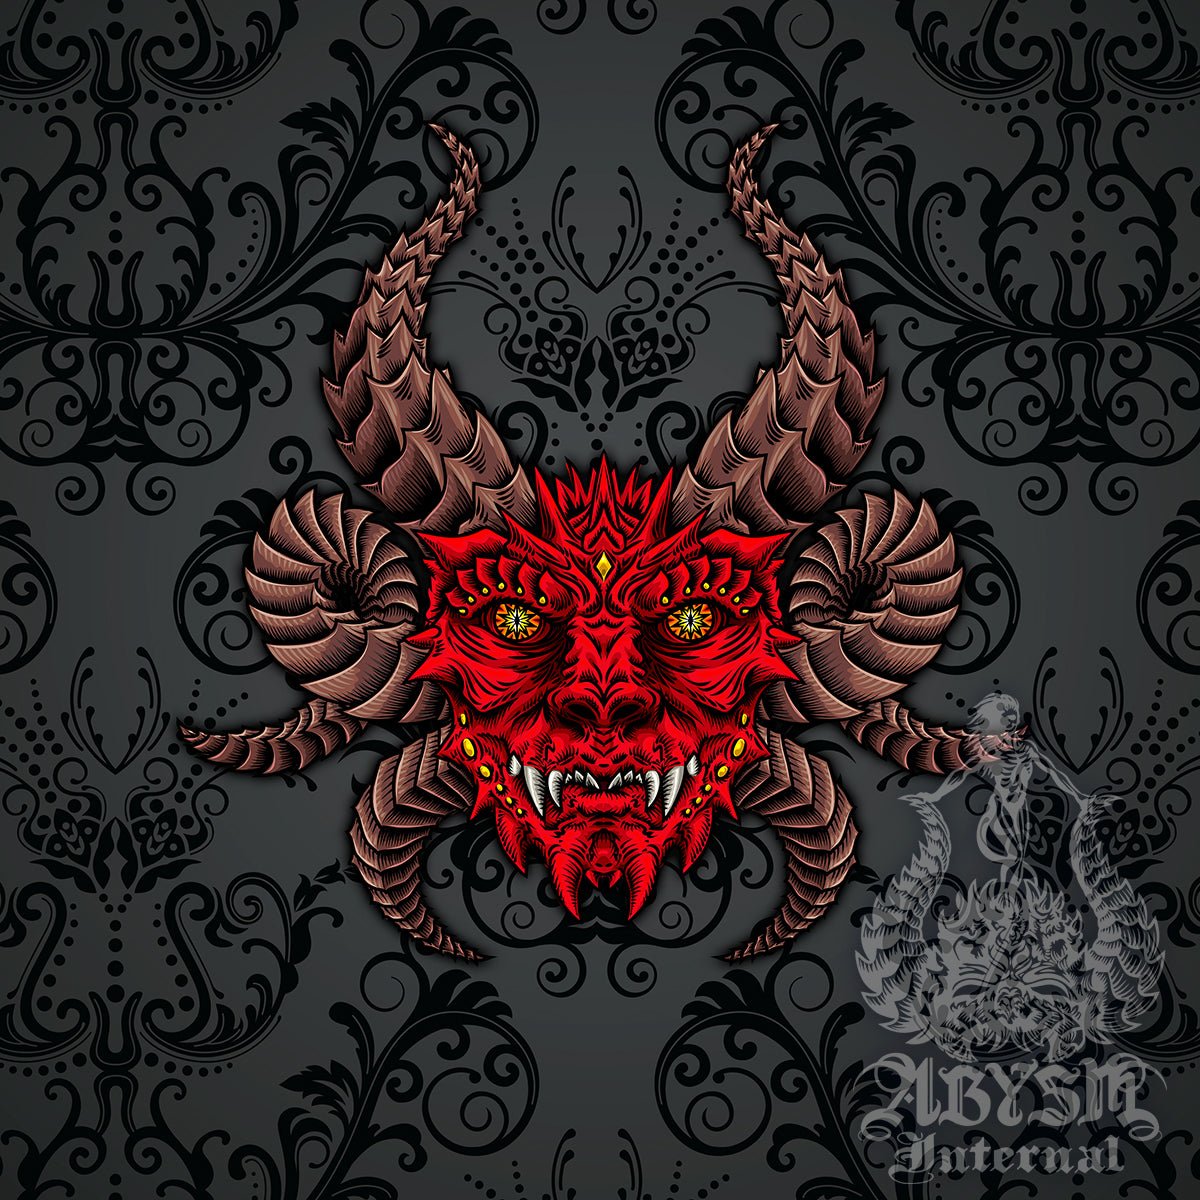 Devil's Eyes - Abysm Internal